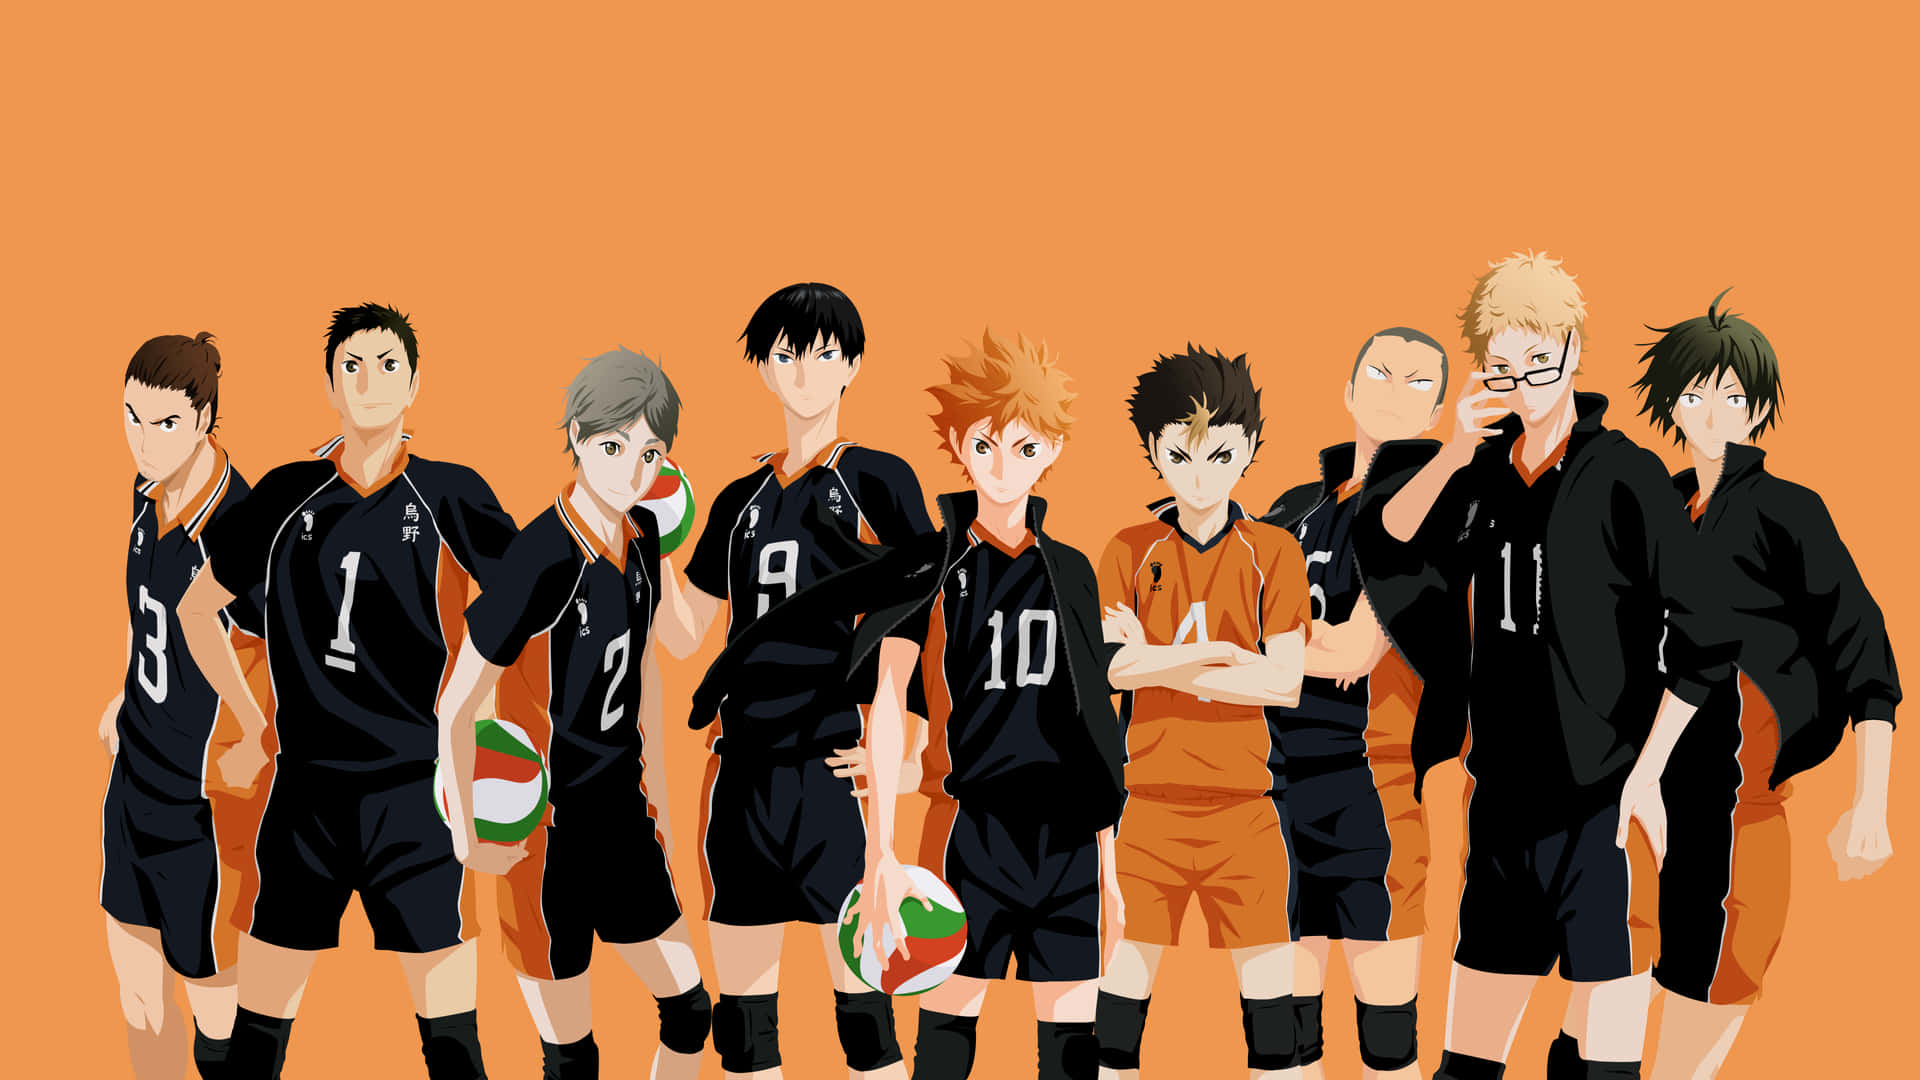 Nekomahigh School's Volleyballhold - Klar Til Sejr. Wallpaper